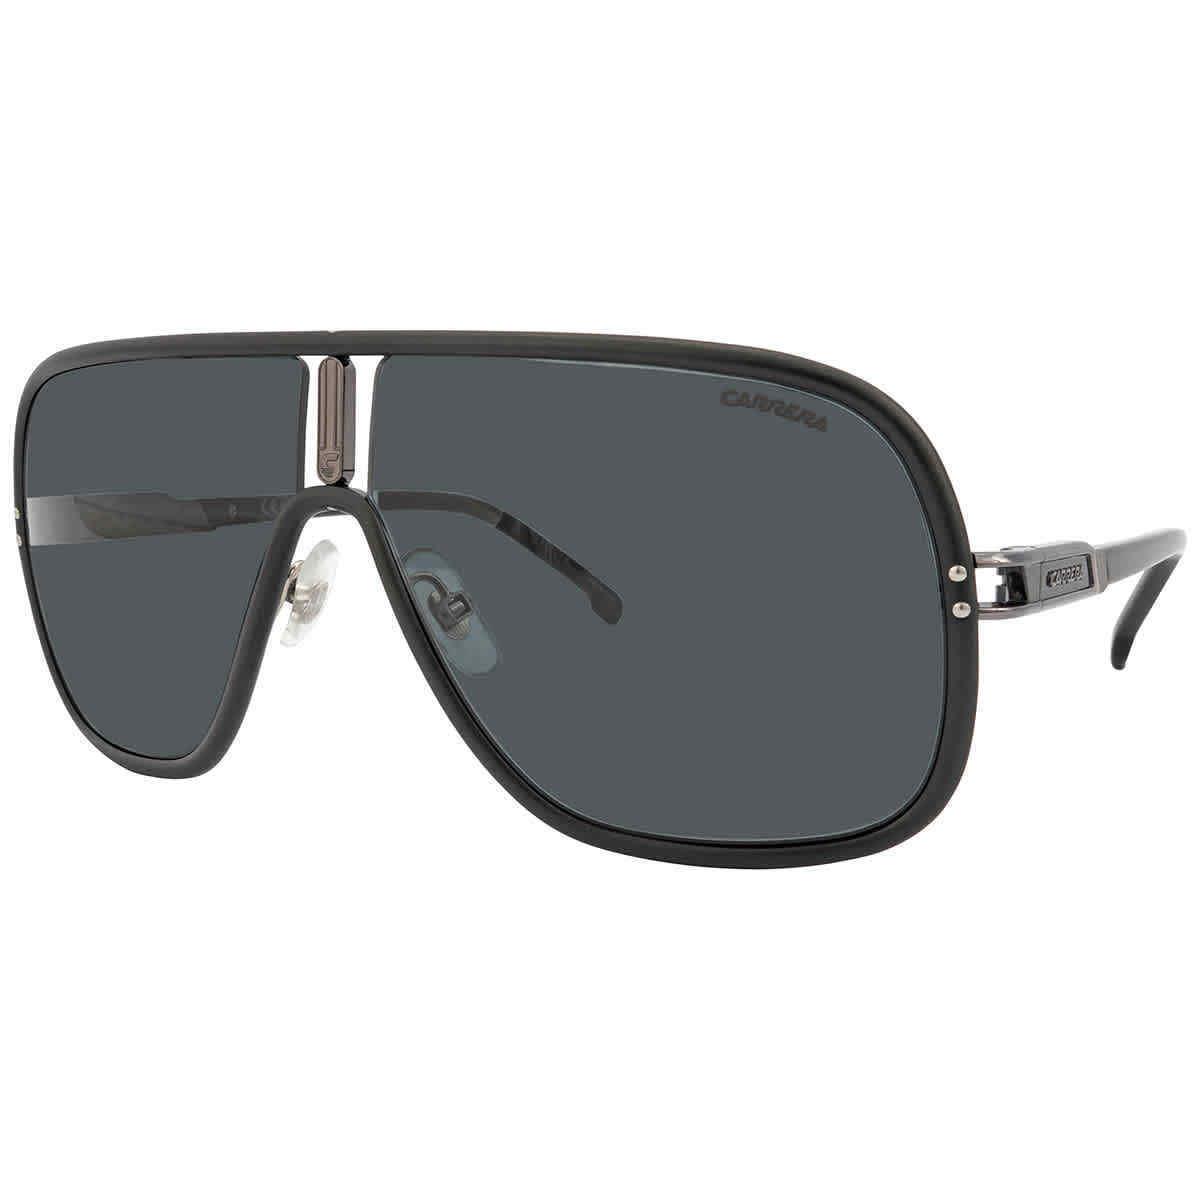 Carrera Grey Rectangular Unisex Sunglasses Flaglab 11 0003/IR 64 Flaglab 11 - Frame: Black, Lens: Grey